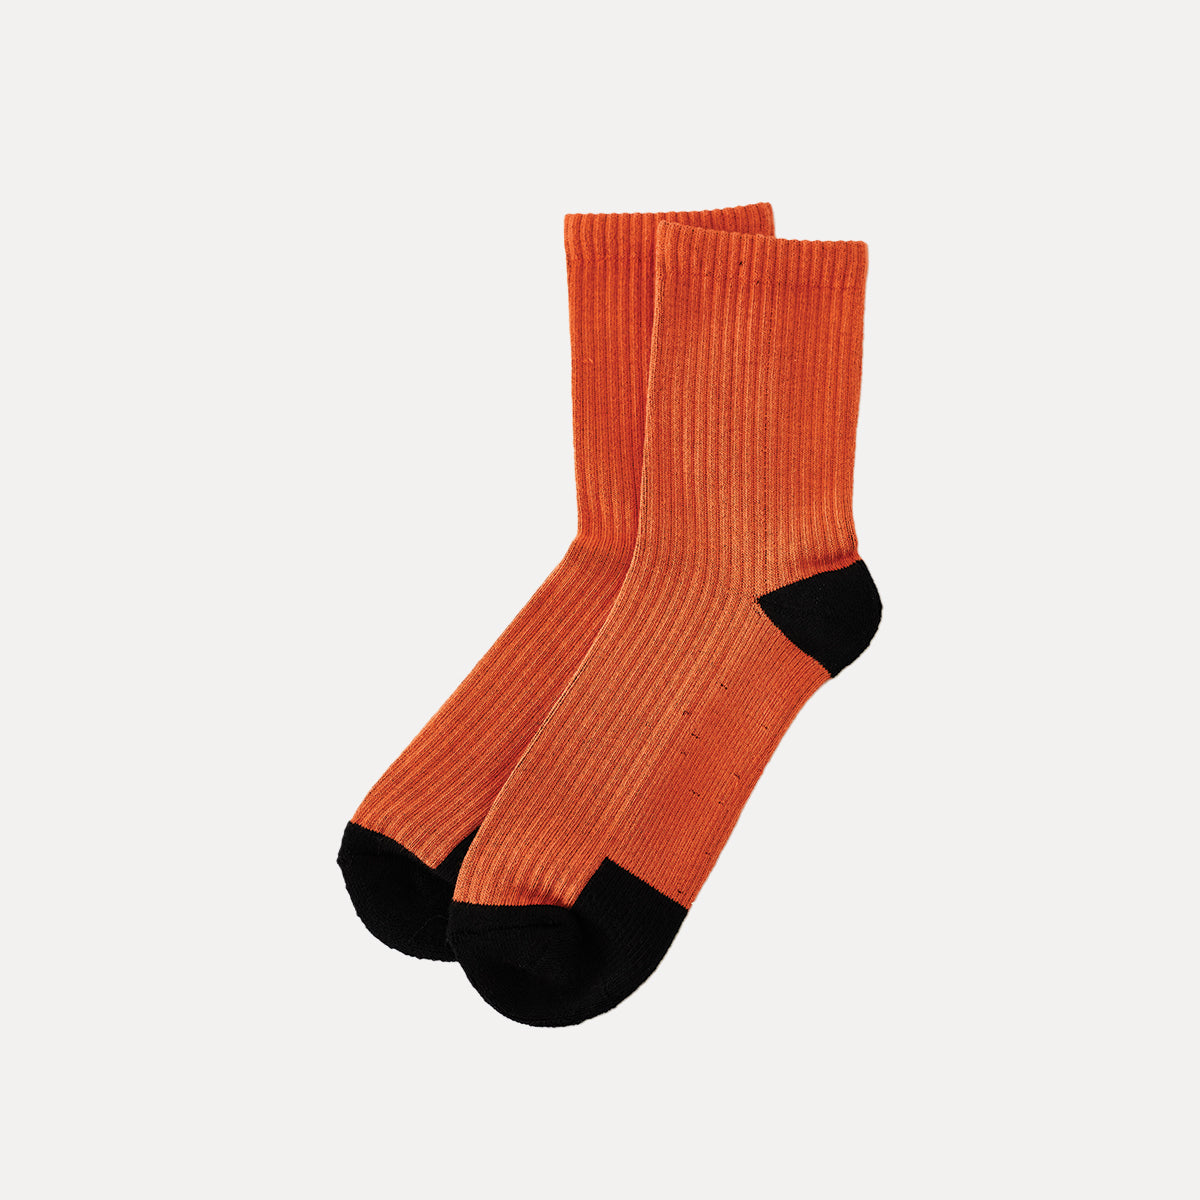 SOCKIC | ACTIVE Crew Sock - Hi Orange/Black